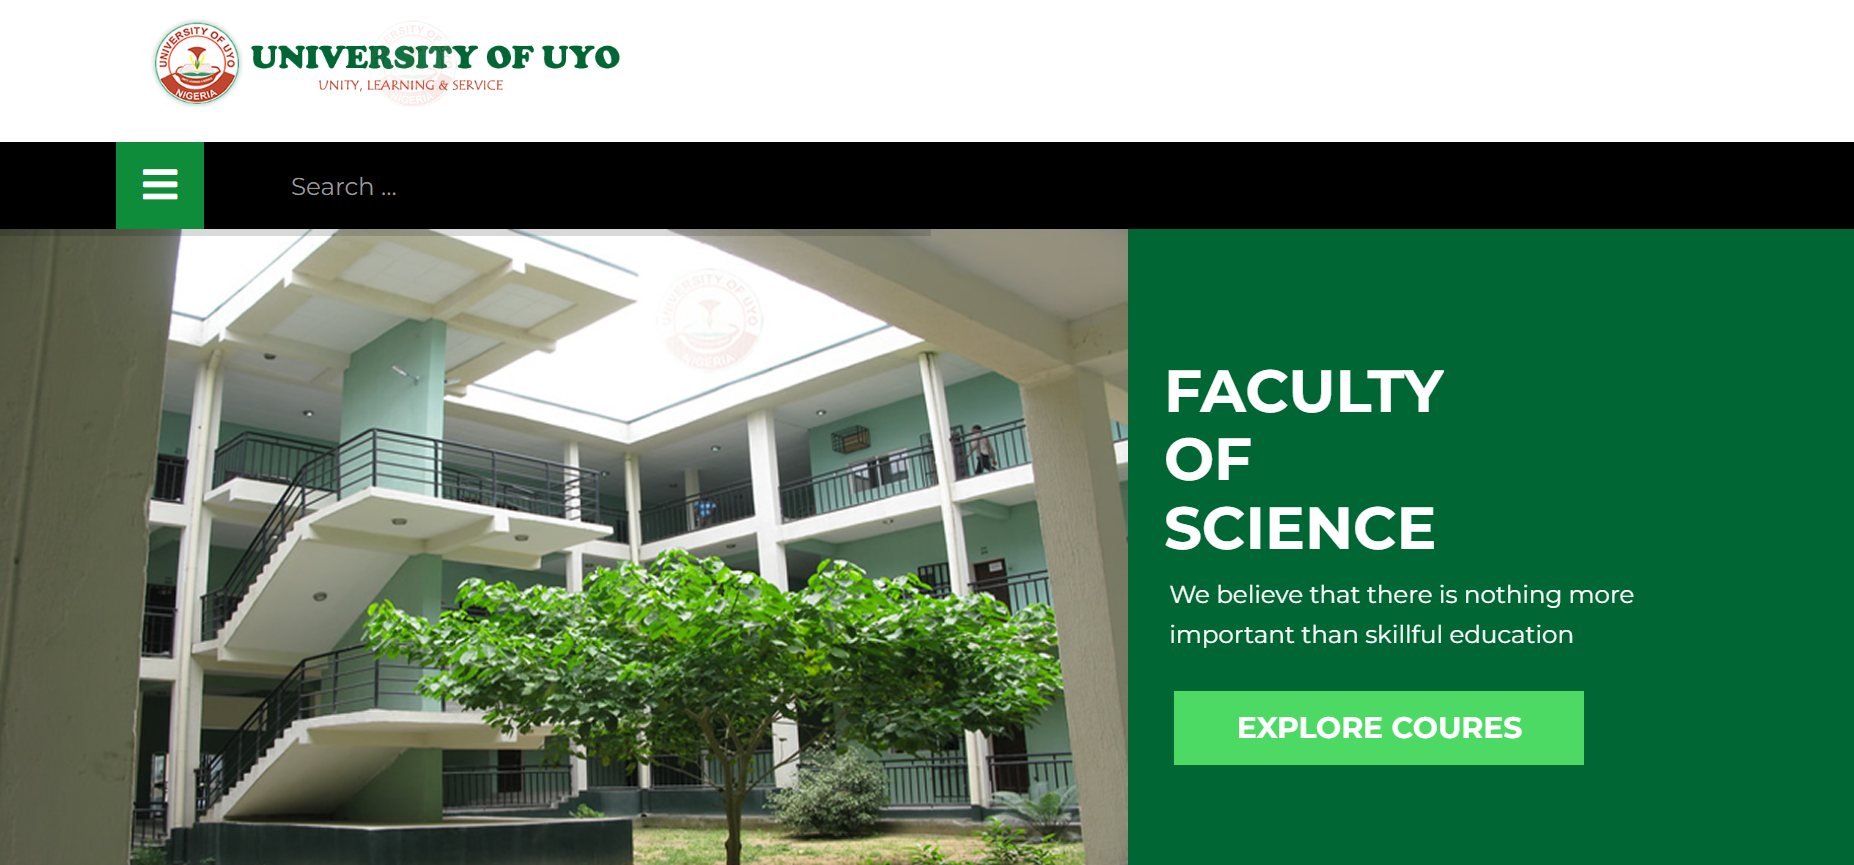 University of Uyo (UNIUYO) Contact Address and Location